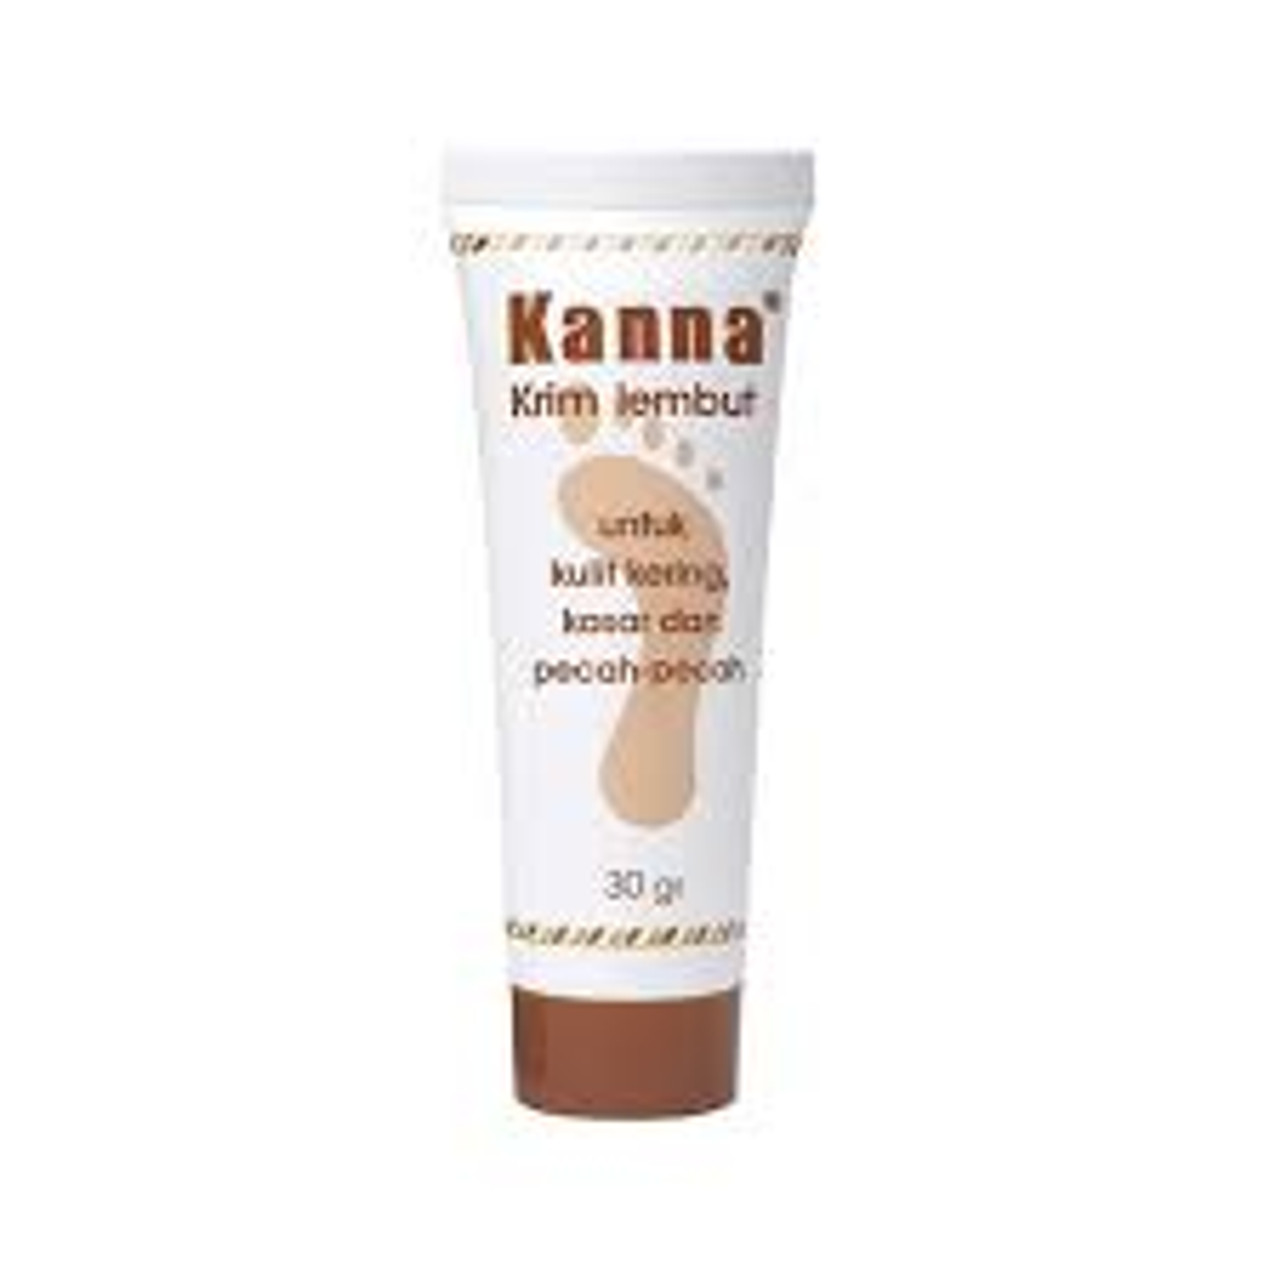 Kanna soft cream  30 gr